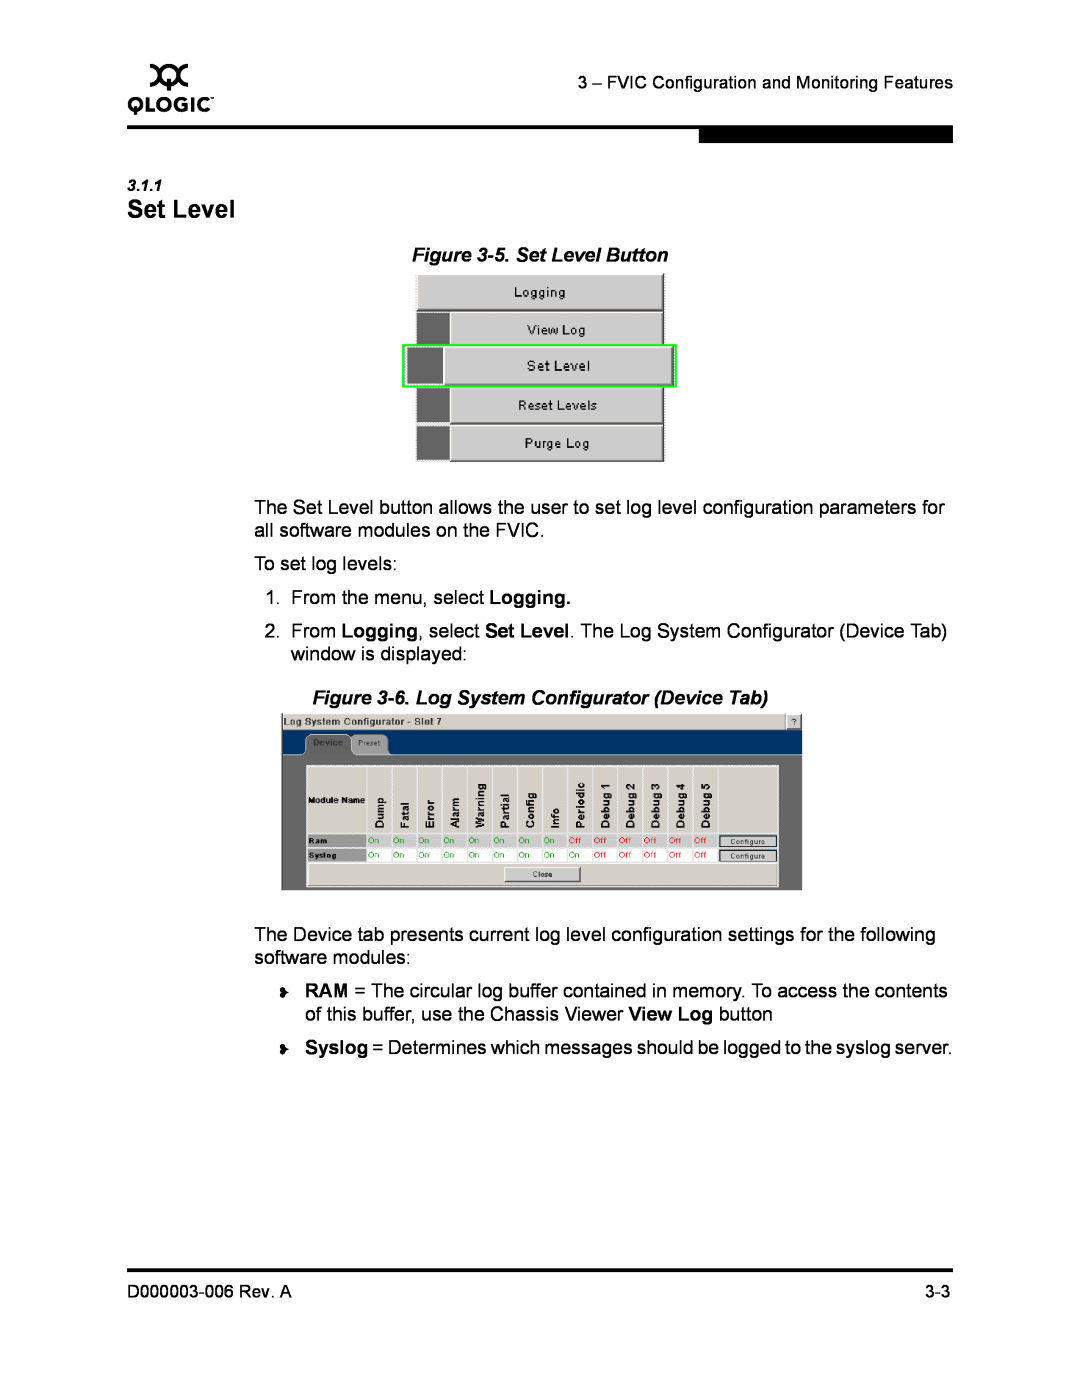 Q-Logic 9000 manual 5. Set Level Button, 6. Log System Configurator Device Tab 